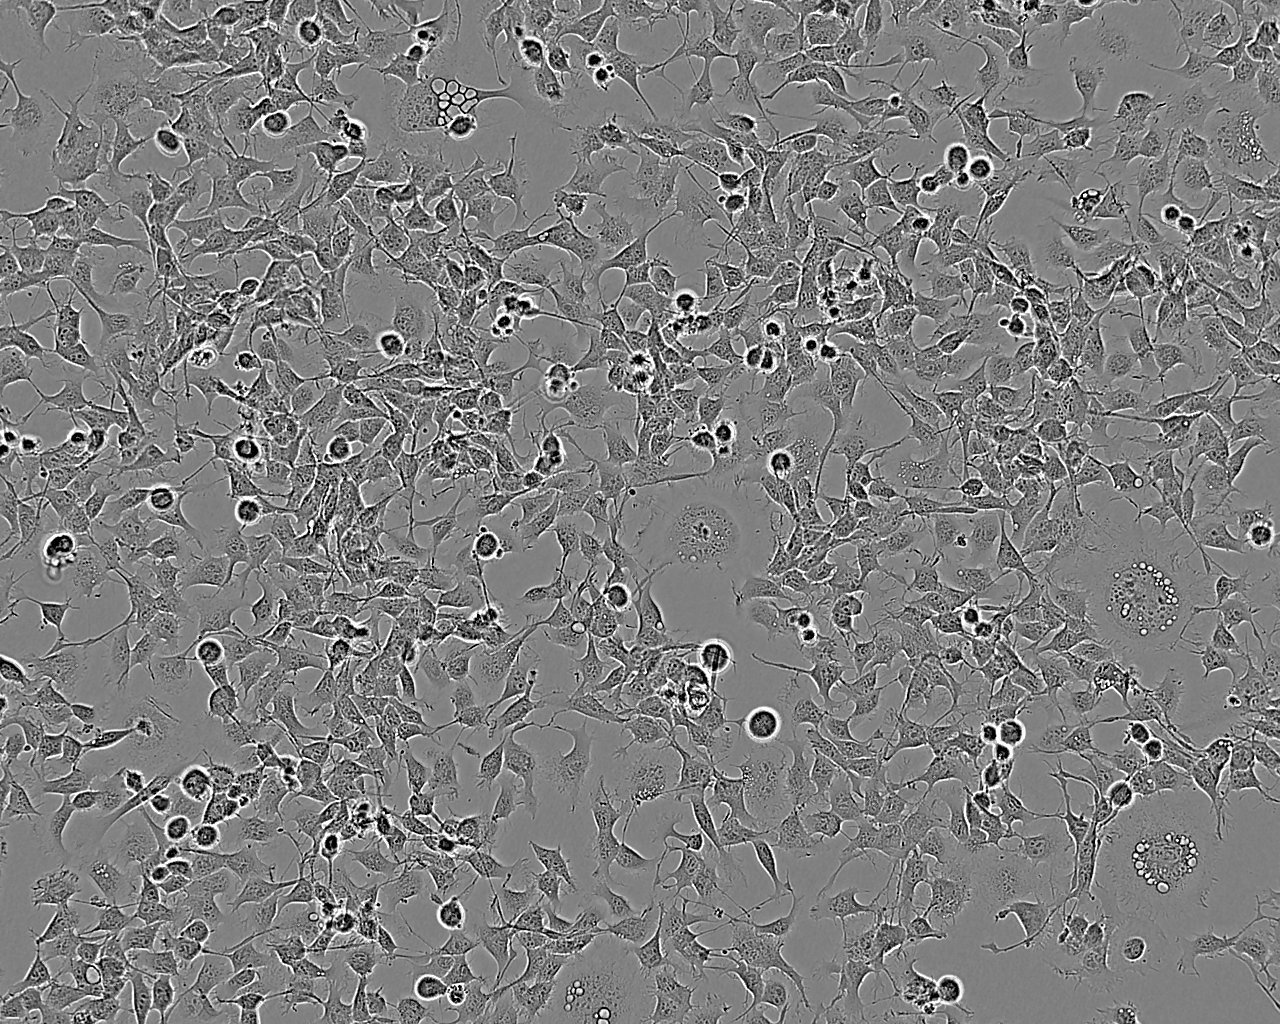 NCI-H650 epithelioid cells人非小细胞肺癌细胞系,NCI-H650 epithelioid cells